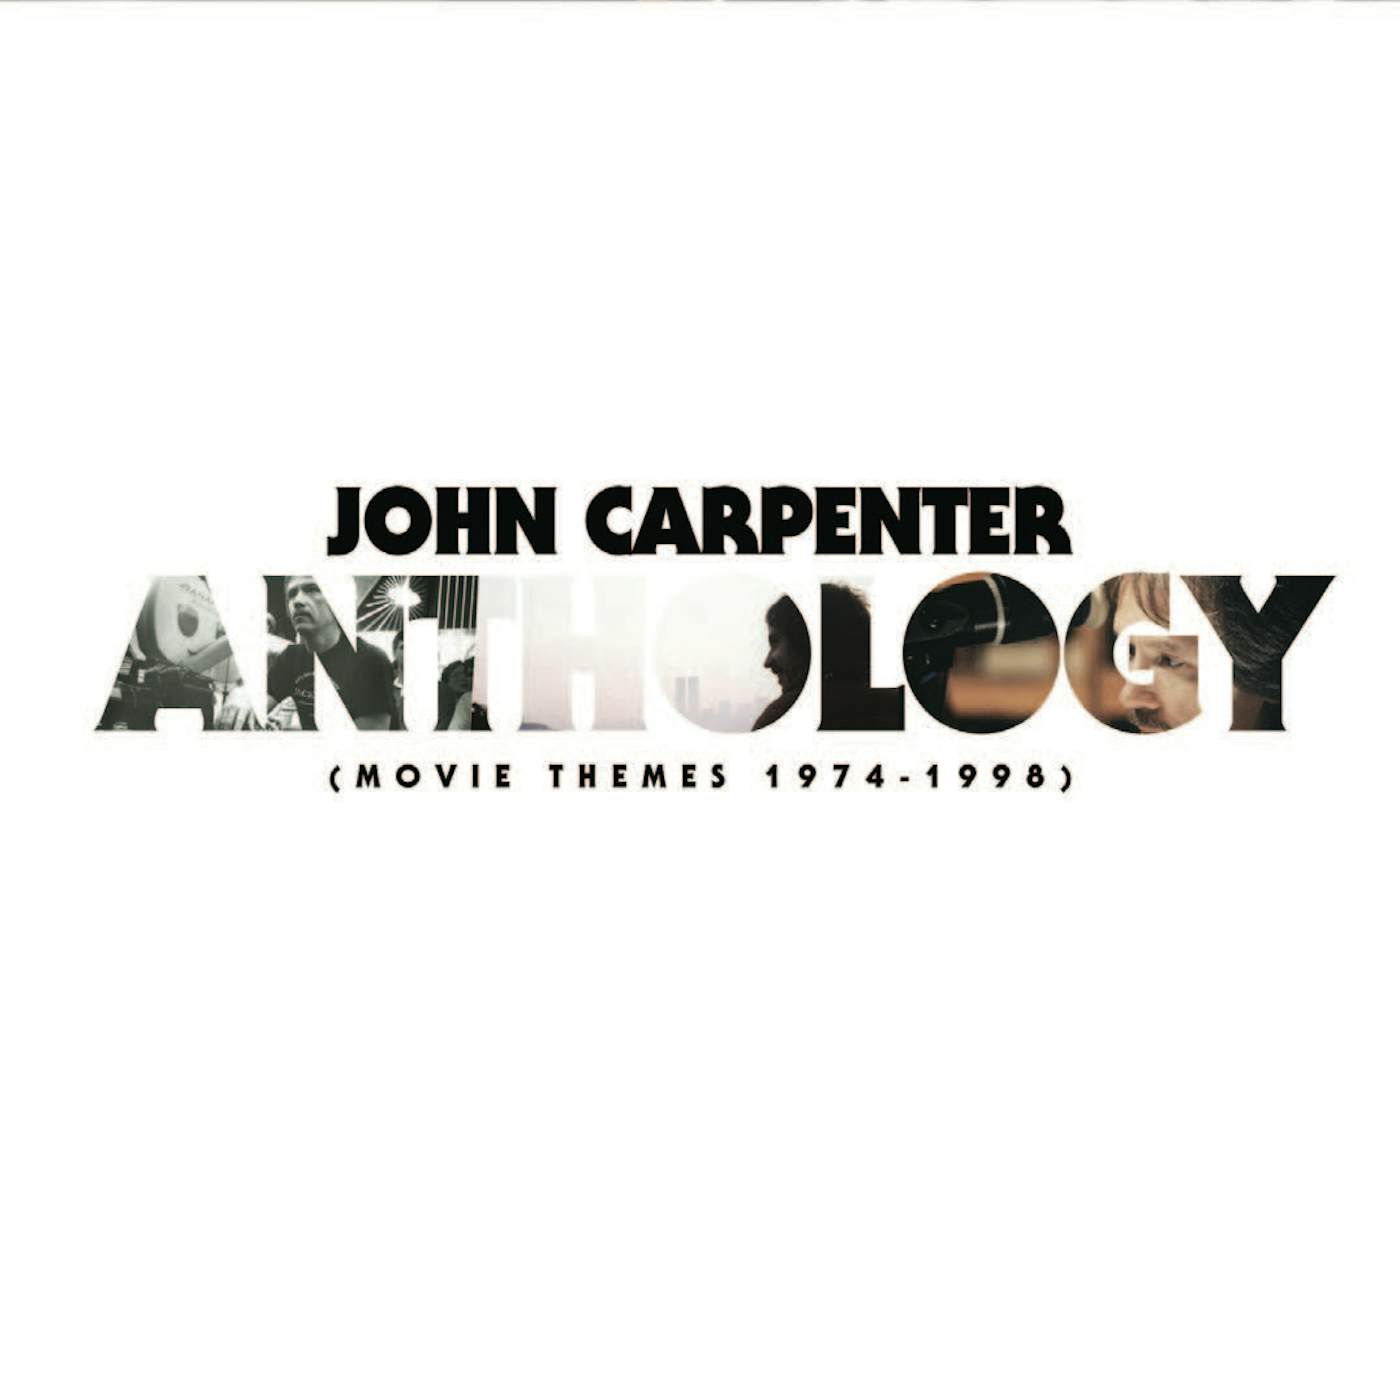 John Carpenter ANTHOLOGY: MOVIE THEMES 1974-1998 - Original Soundtrack Vinyl Record